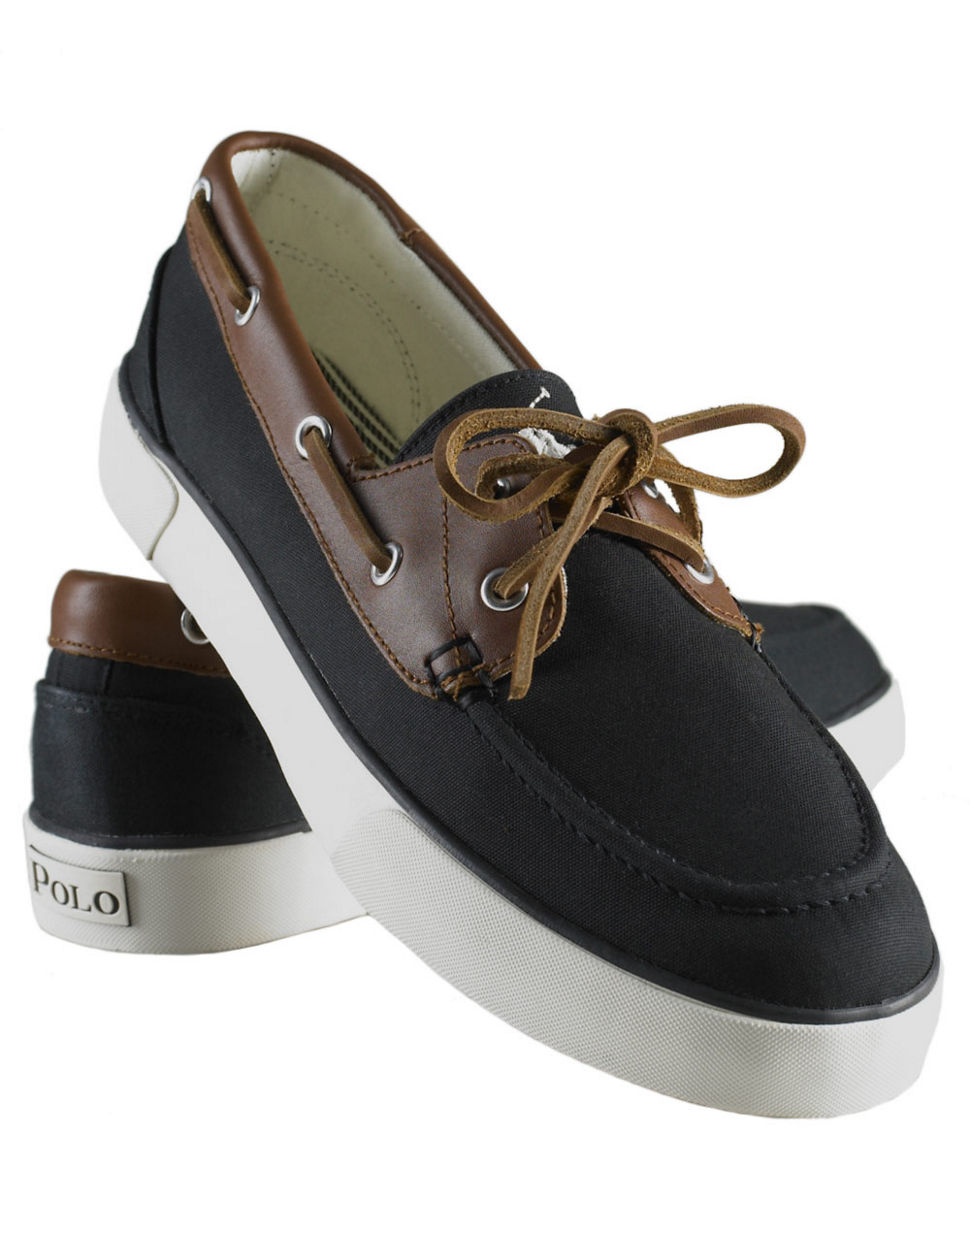 polo deck shoes